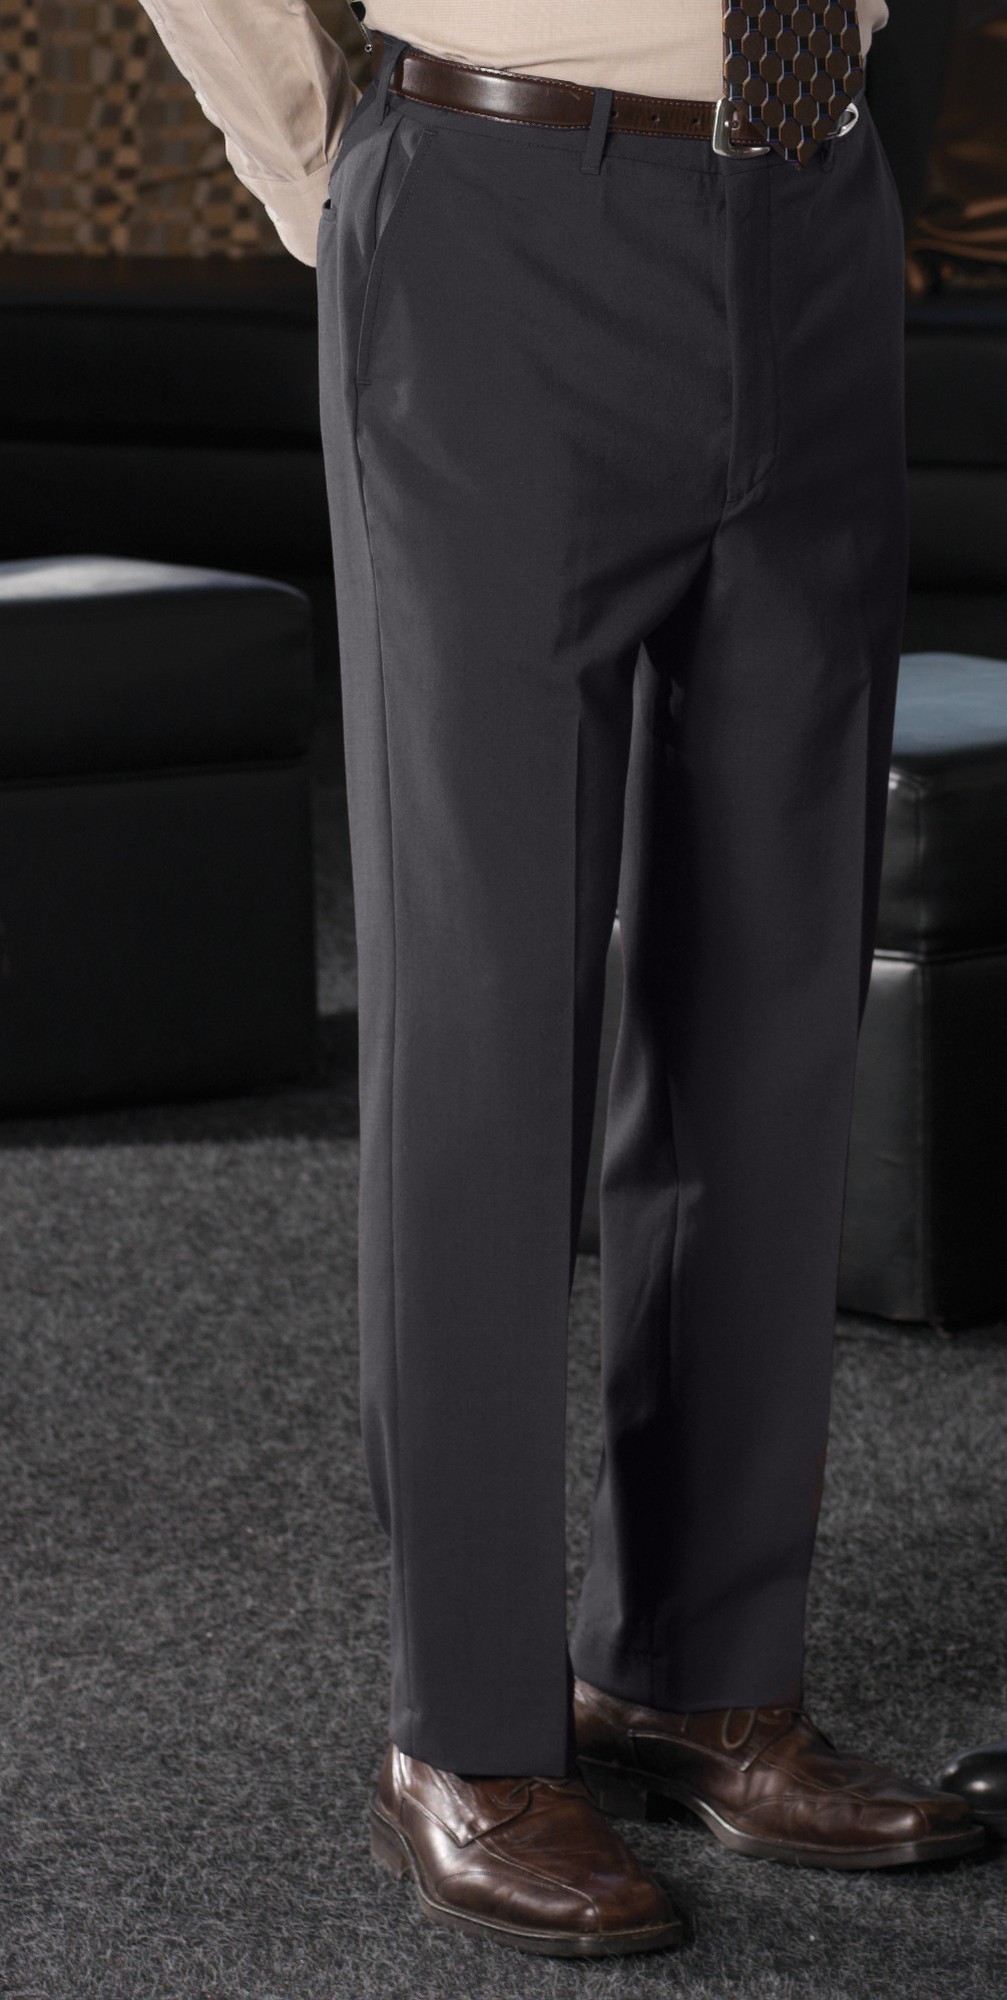 Edwards Men's Wool Blend Flat Front Dress Pant - Online exclusive